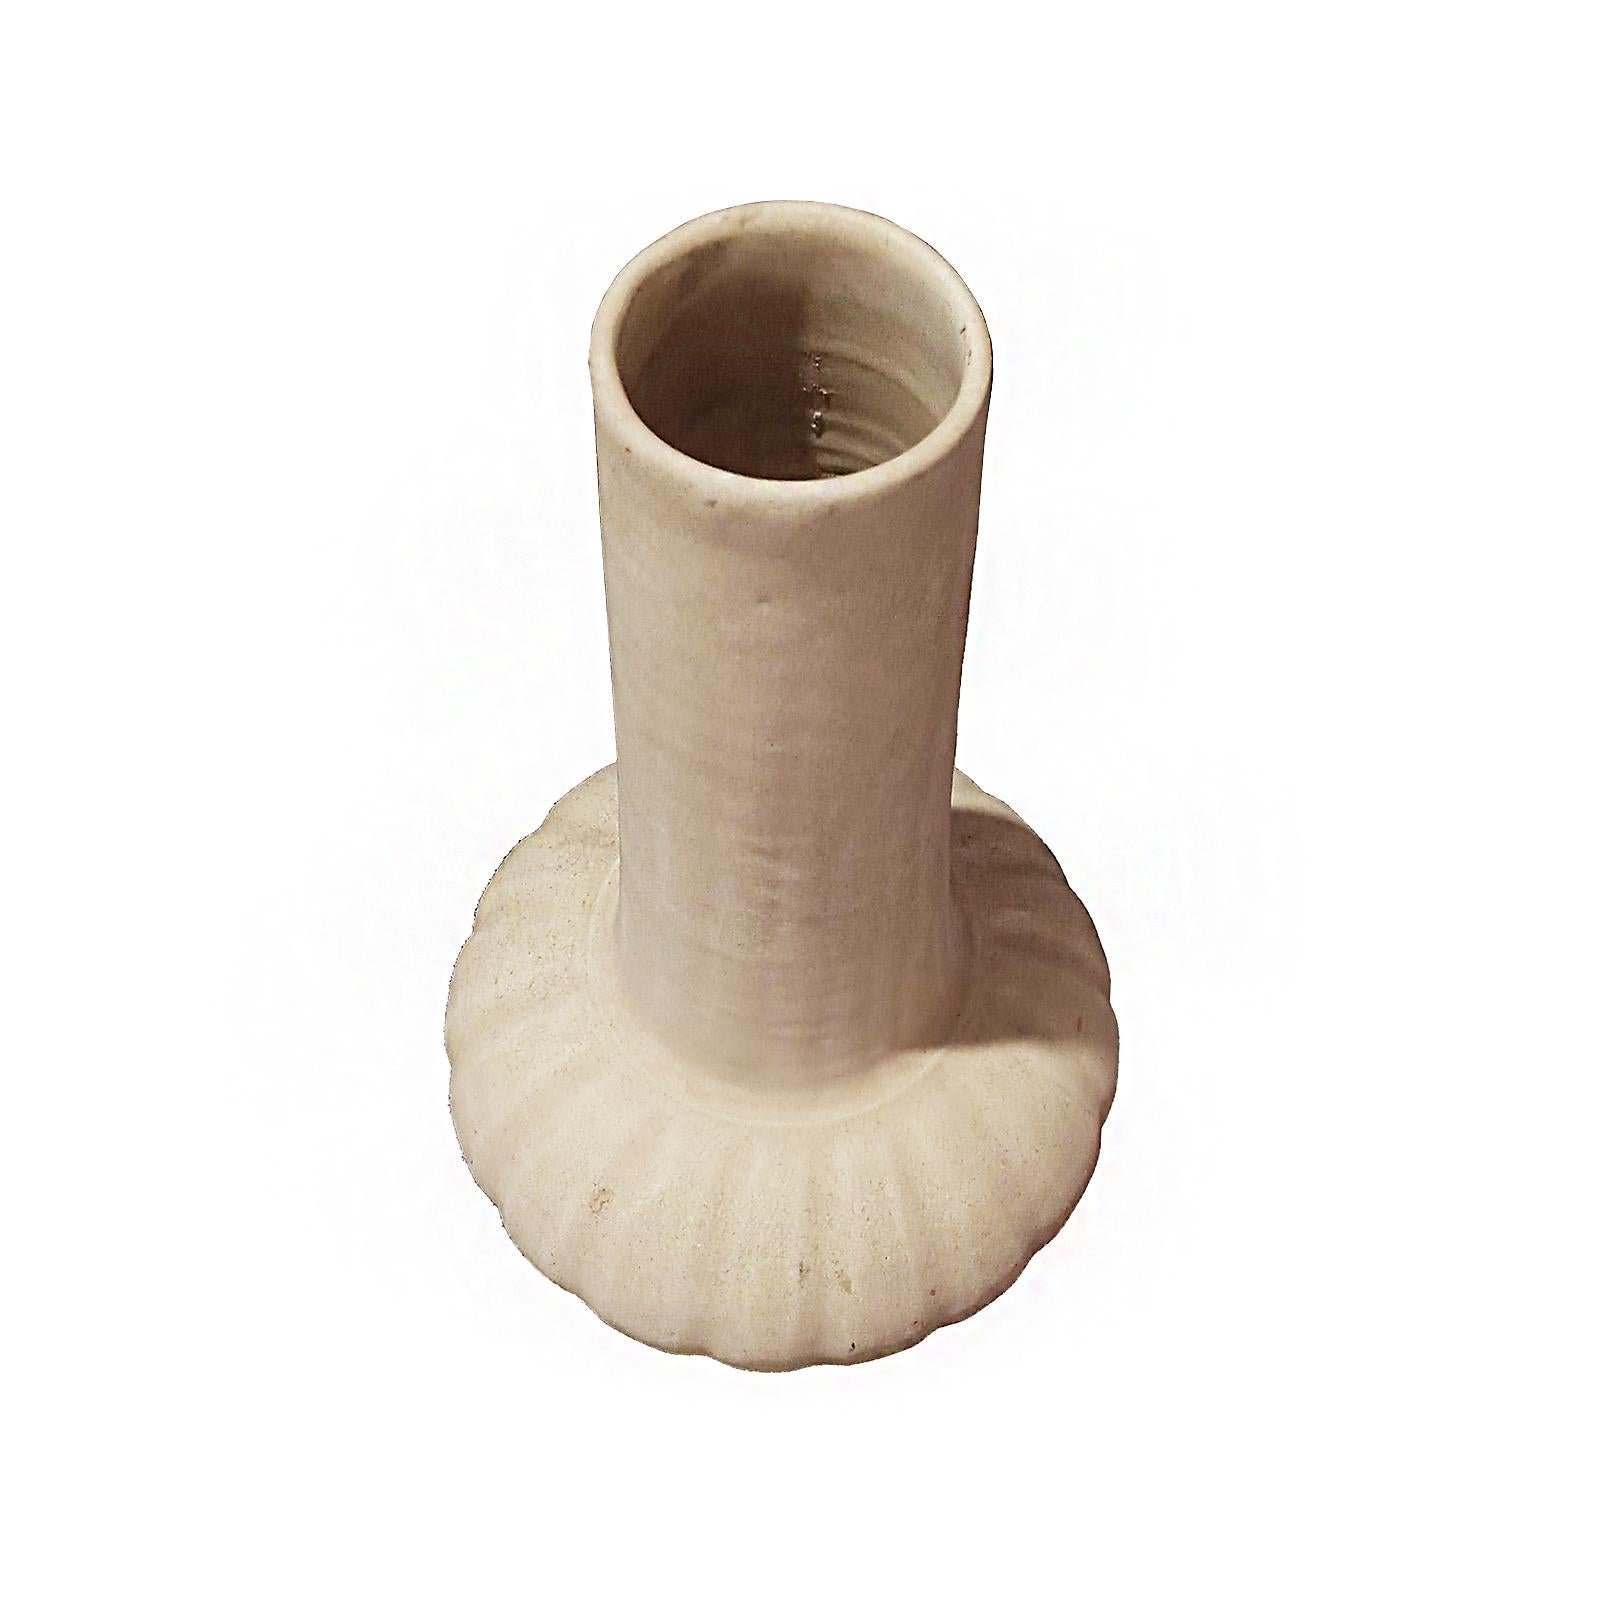 Contemporary Thai Ceramic Vase with Light Beige Glaze